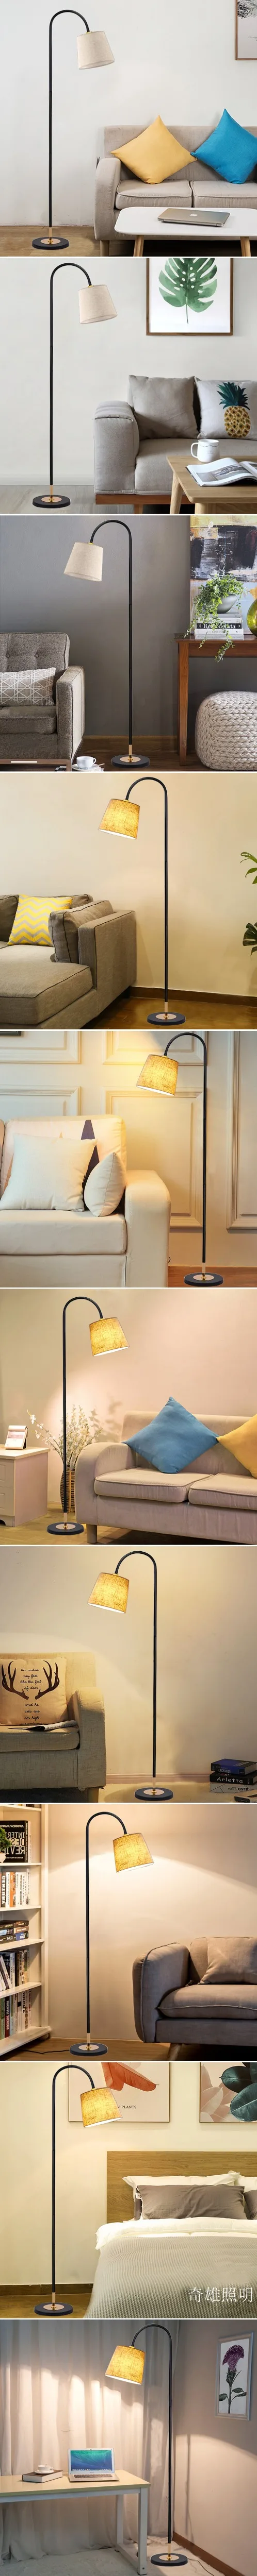 Nordic modern simple fishing floor lamp living room study bedroom bedside lamp LED eye protection reading vertical table lamp